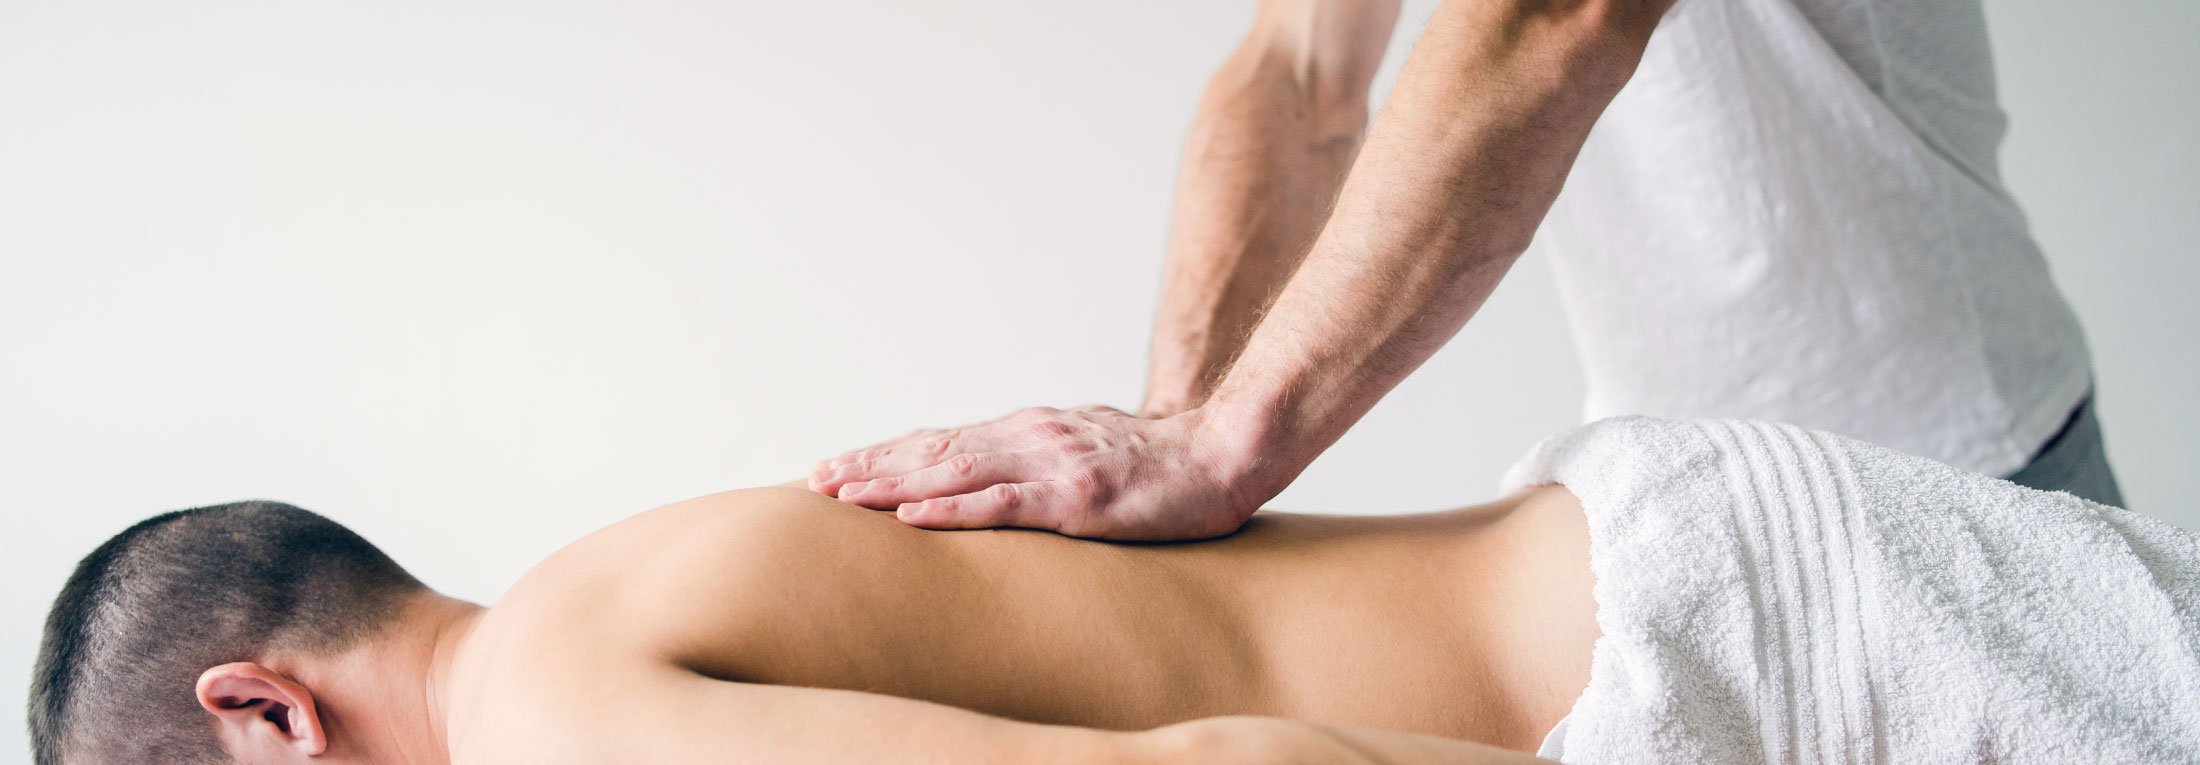 Message therapist giving a man a massage